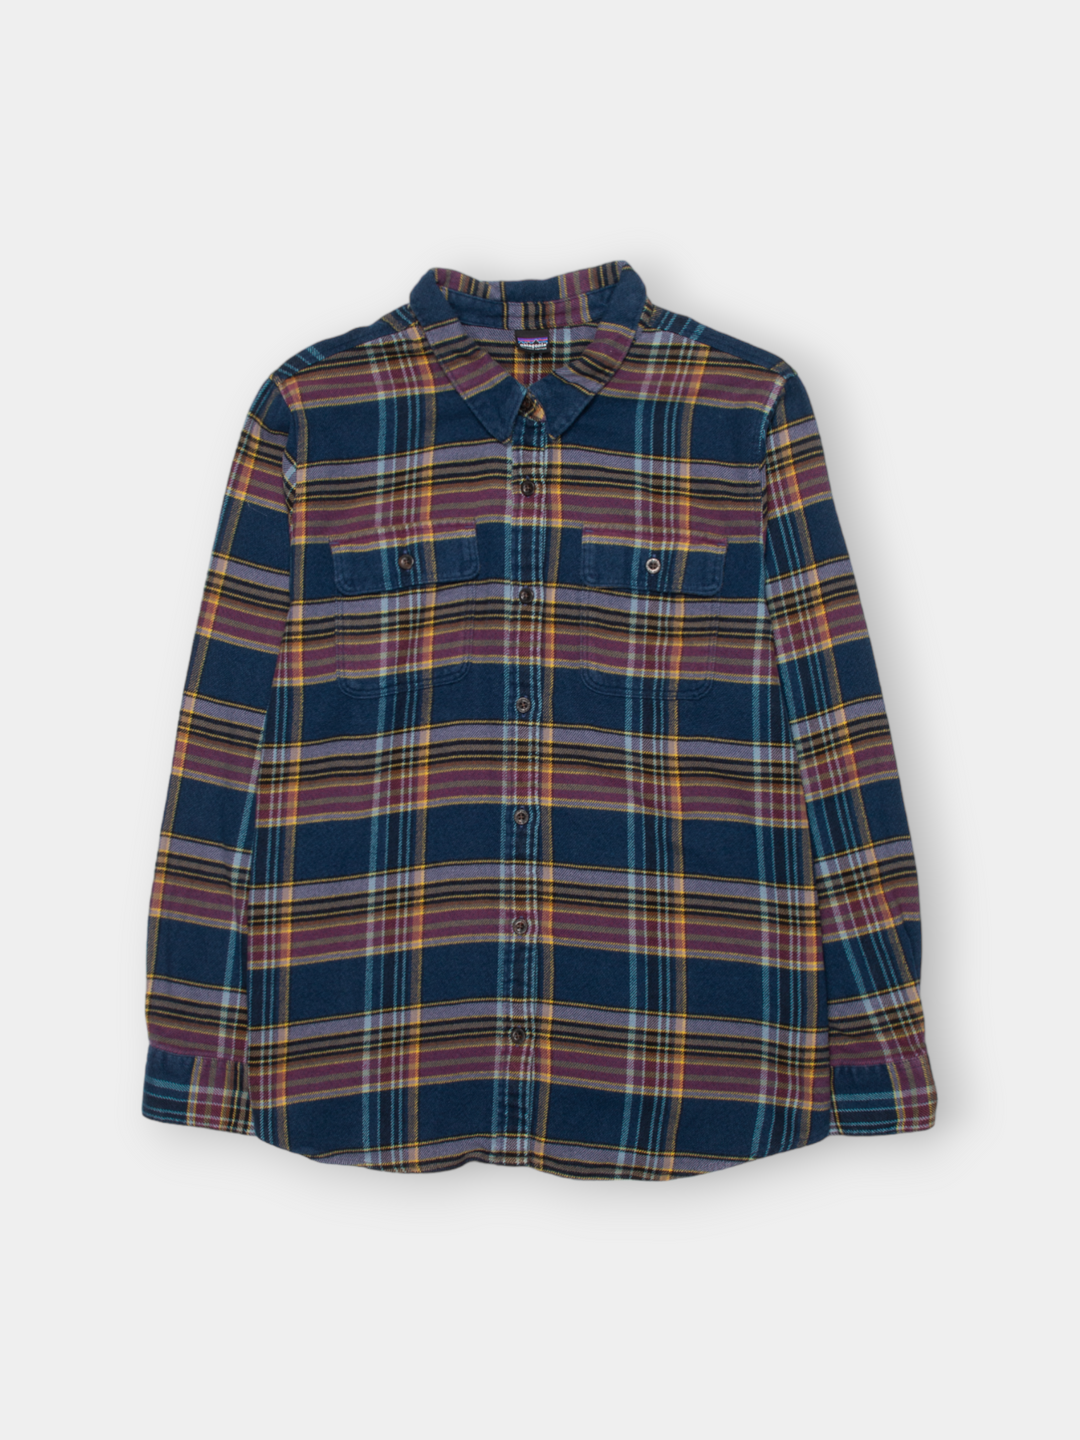 Vintage Patagonia Flannel Shirt (S)